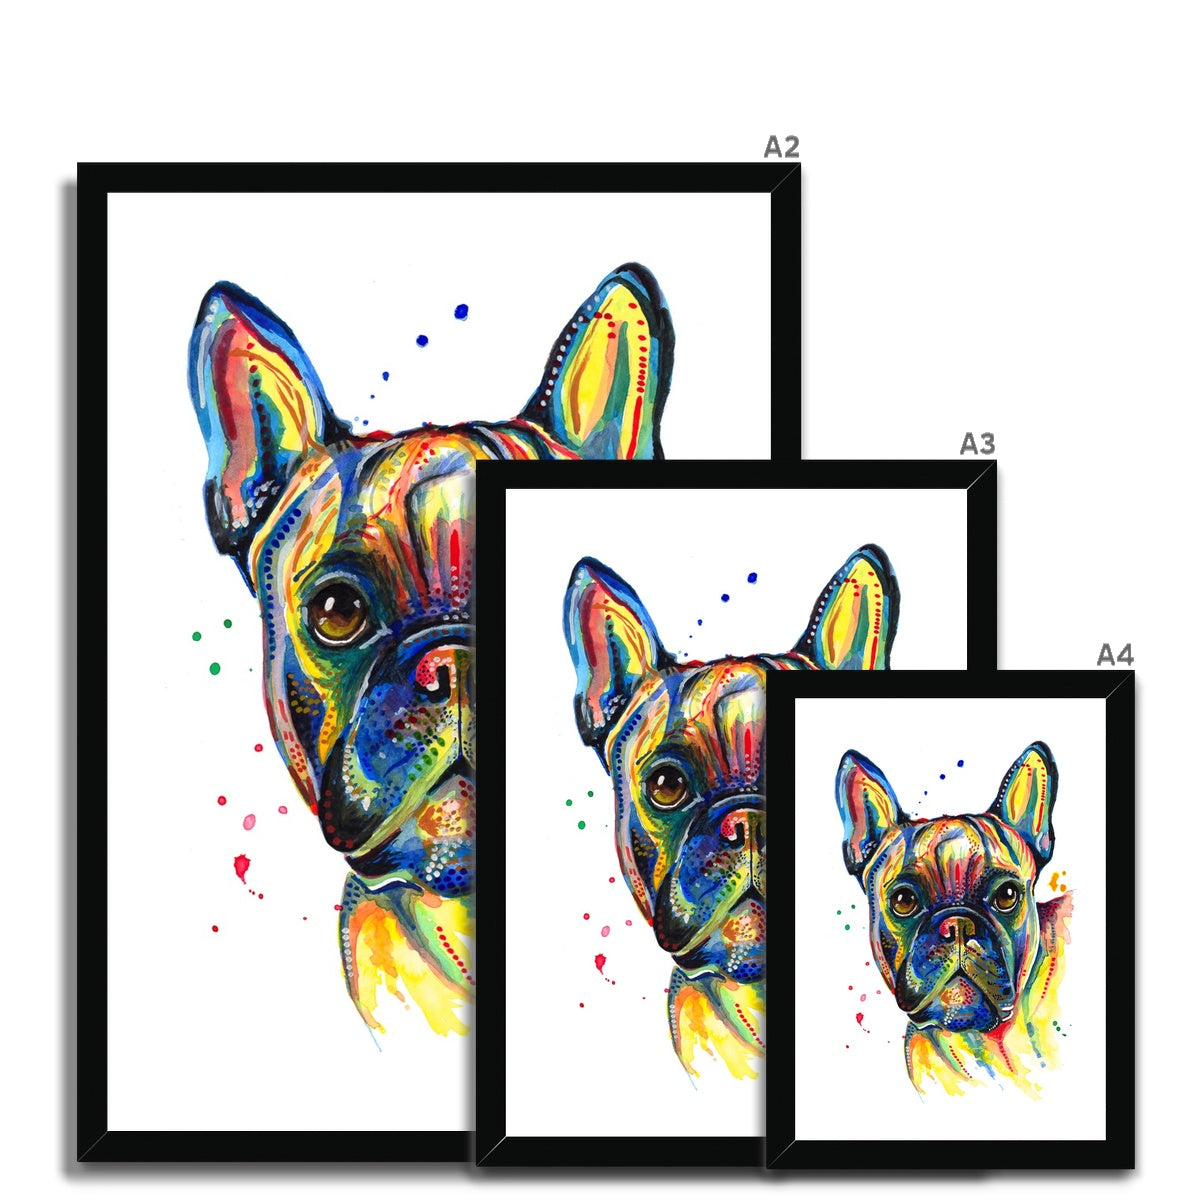 French Bulldog framed Print Size Guide